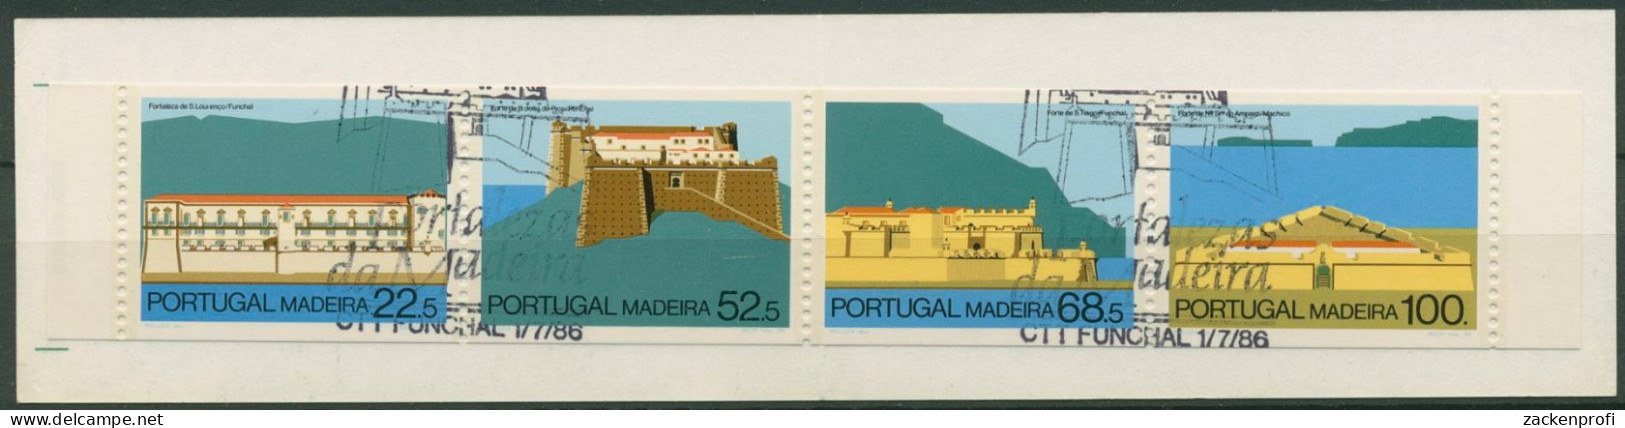 Portugal - Madeira 1986 Festungen Markenheftchen MH 6 Gestempelt (C98460) - Madeira